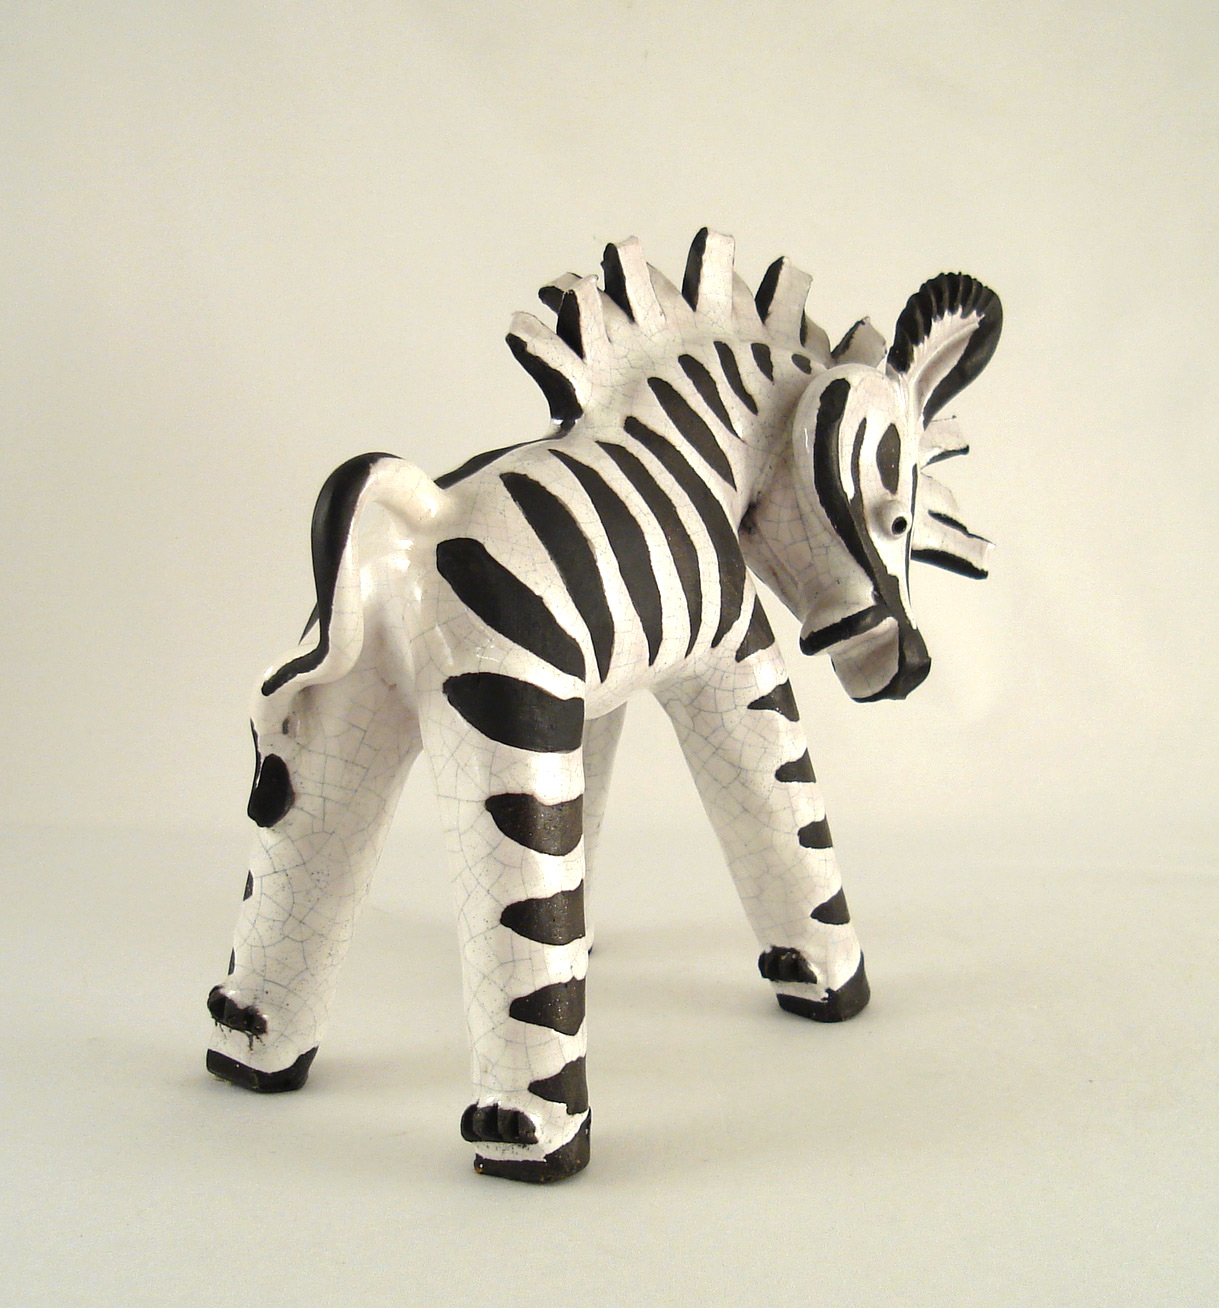 Archive: Anzengruber - Happy zebra